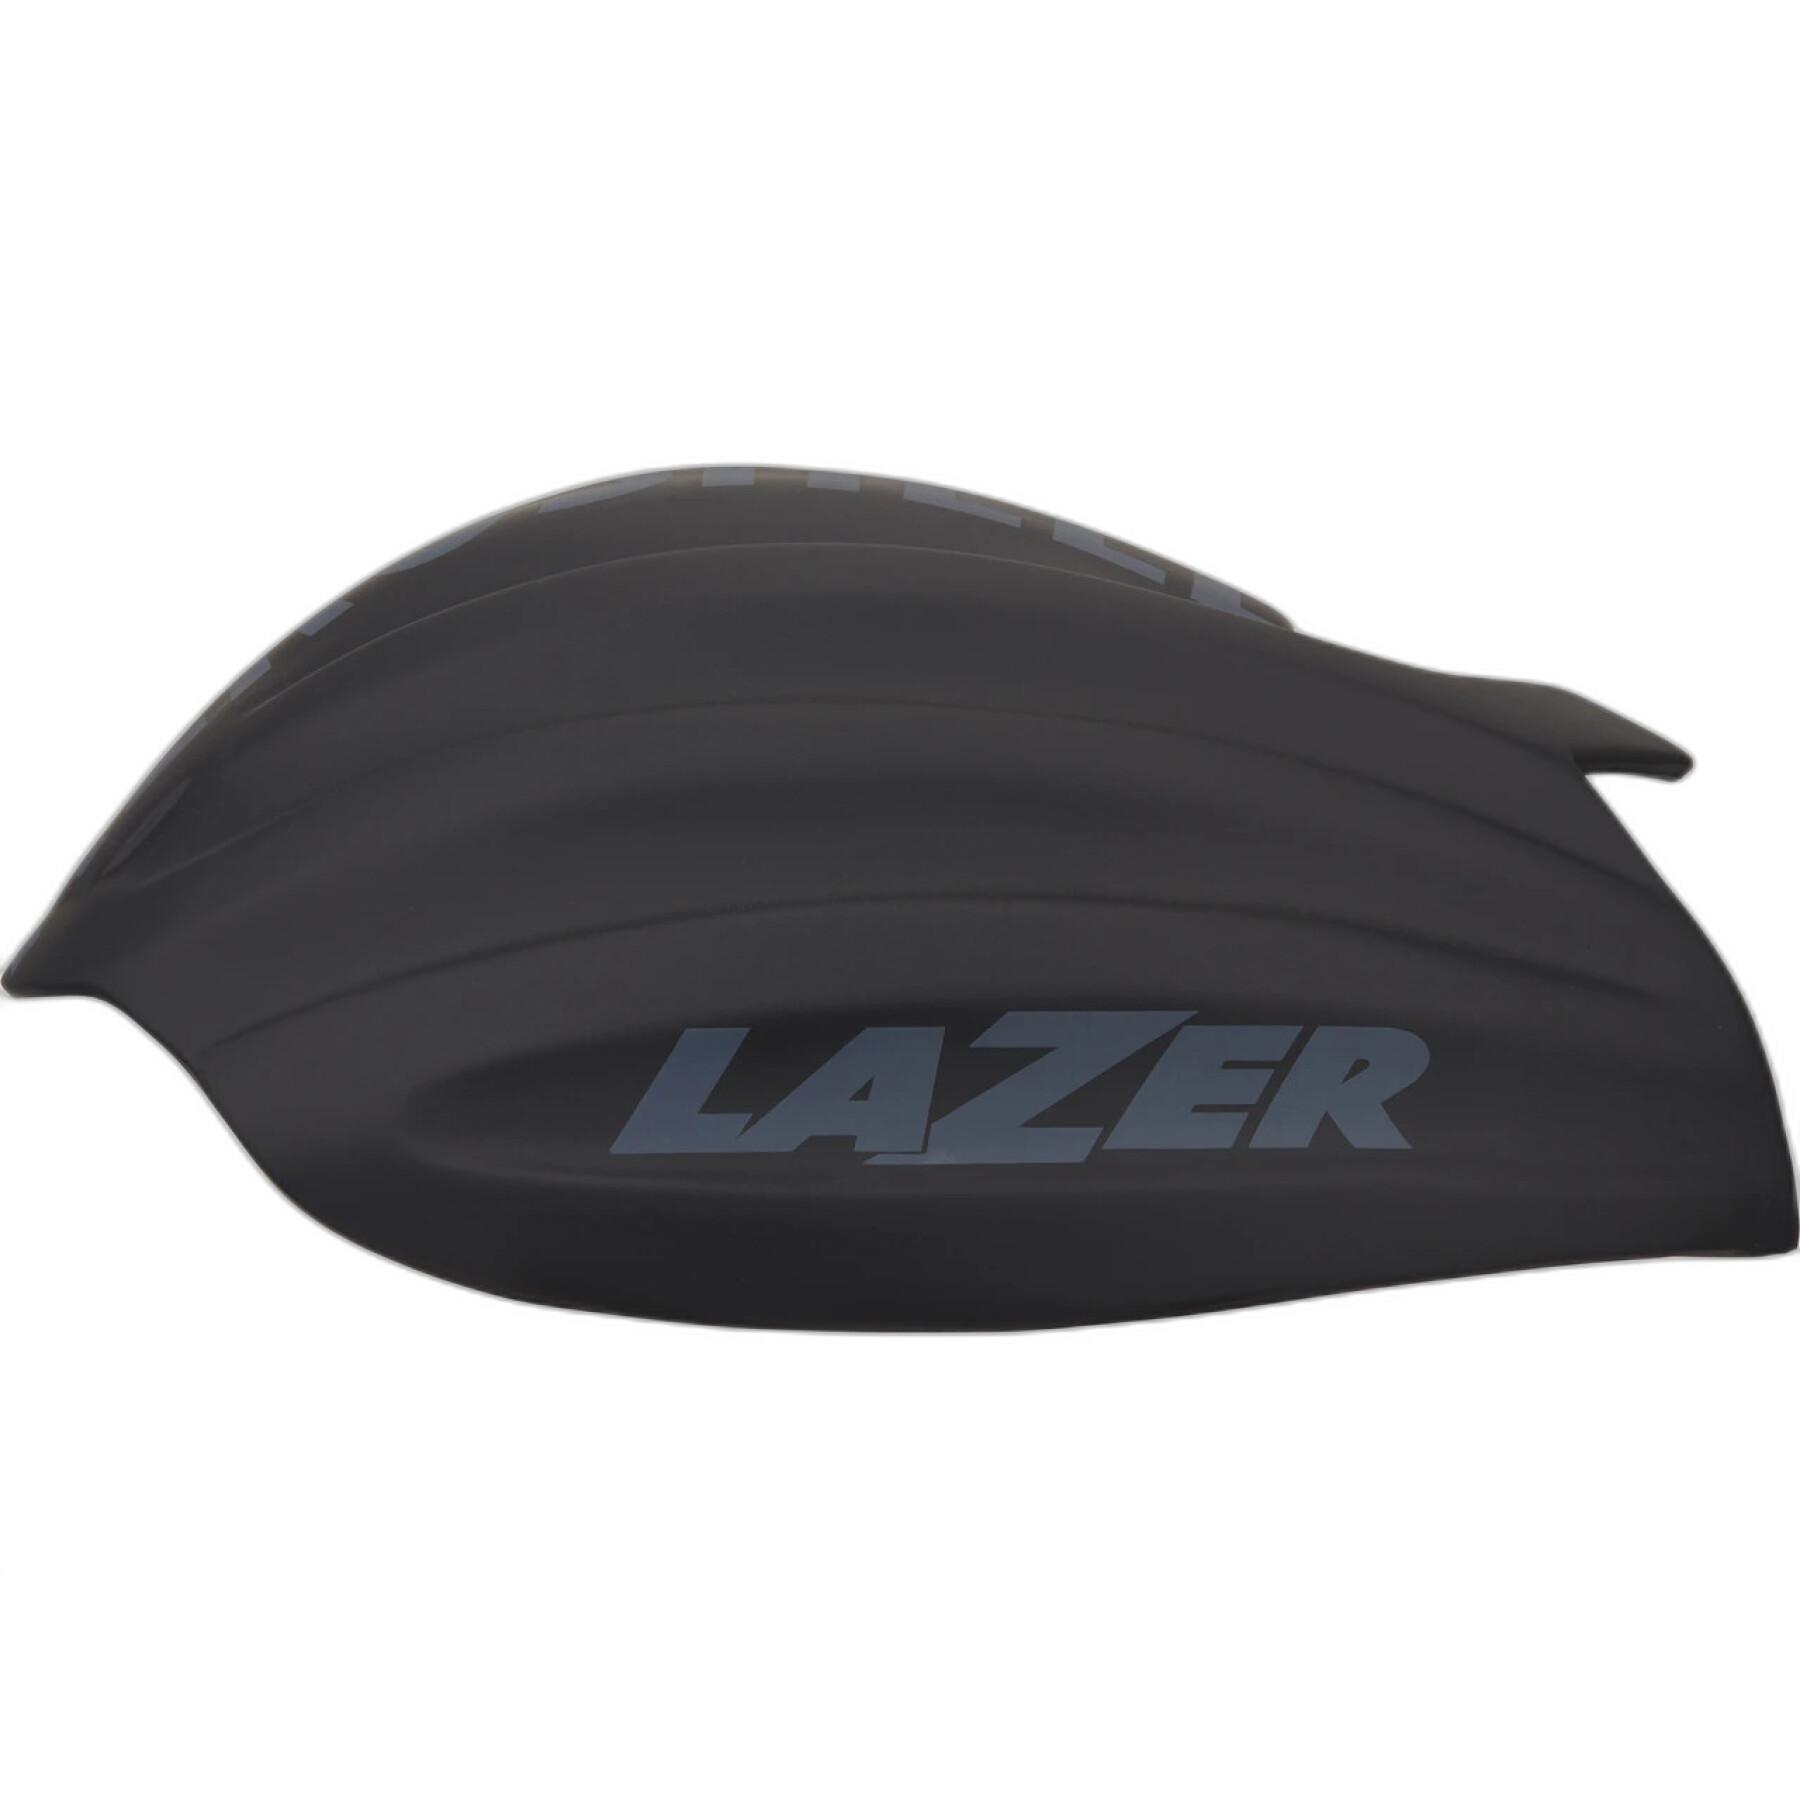 Carcasa de casco Lazer Aeroshell Z1